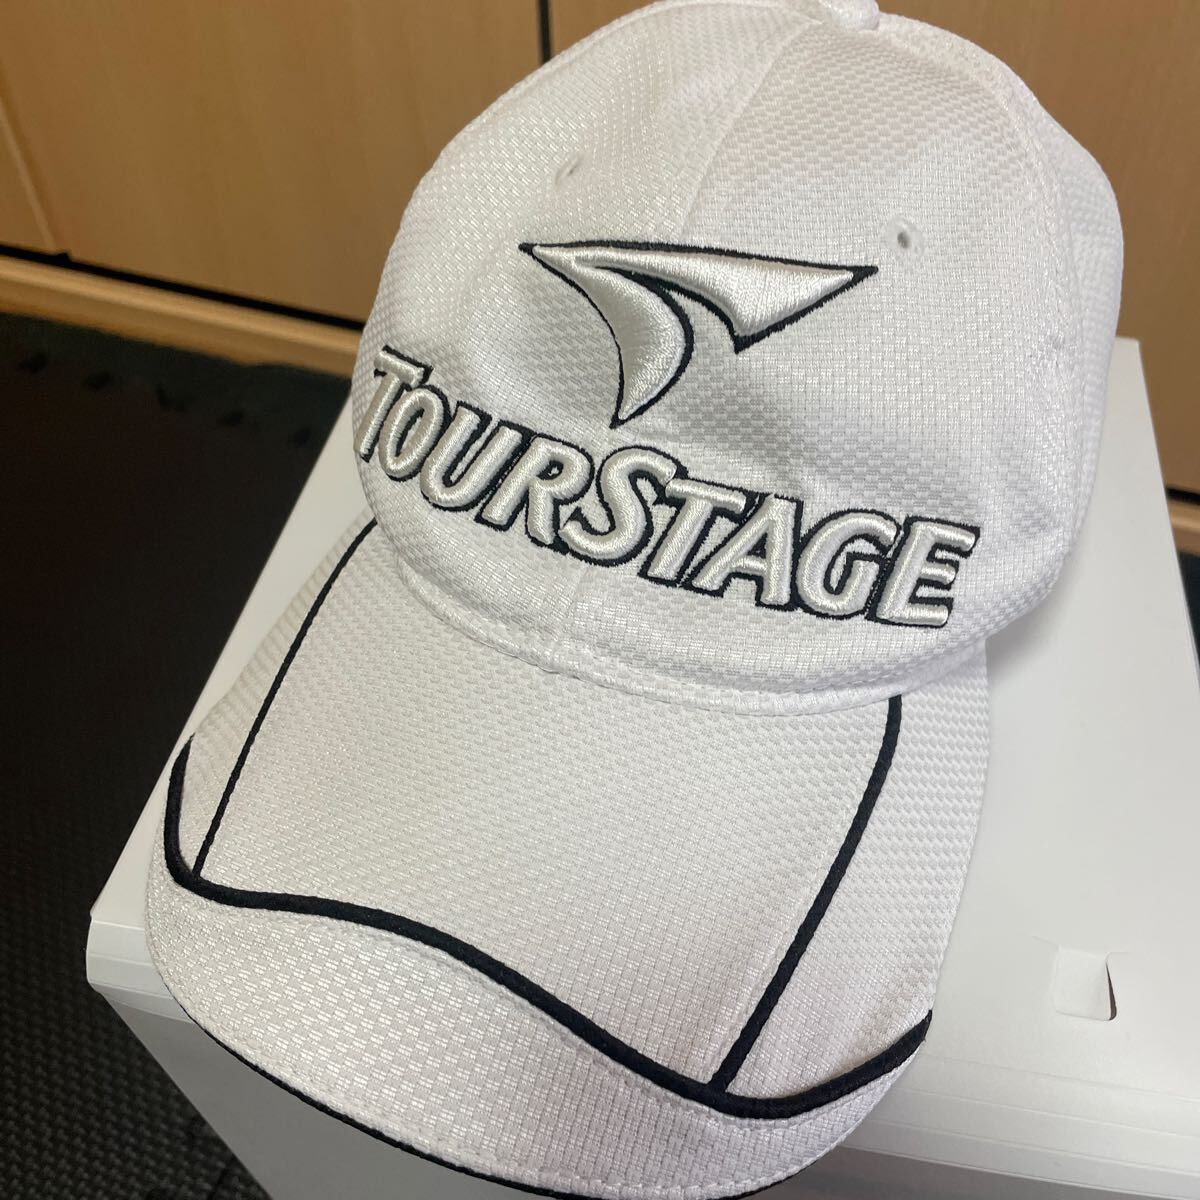 TOURSTAGE Golf колпак Tour Stage GOLF колпак шляпа белый 